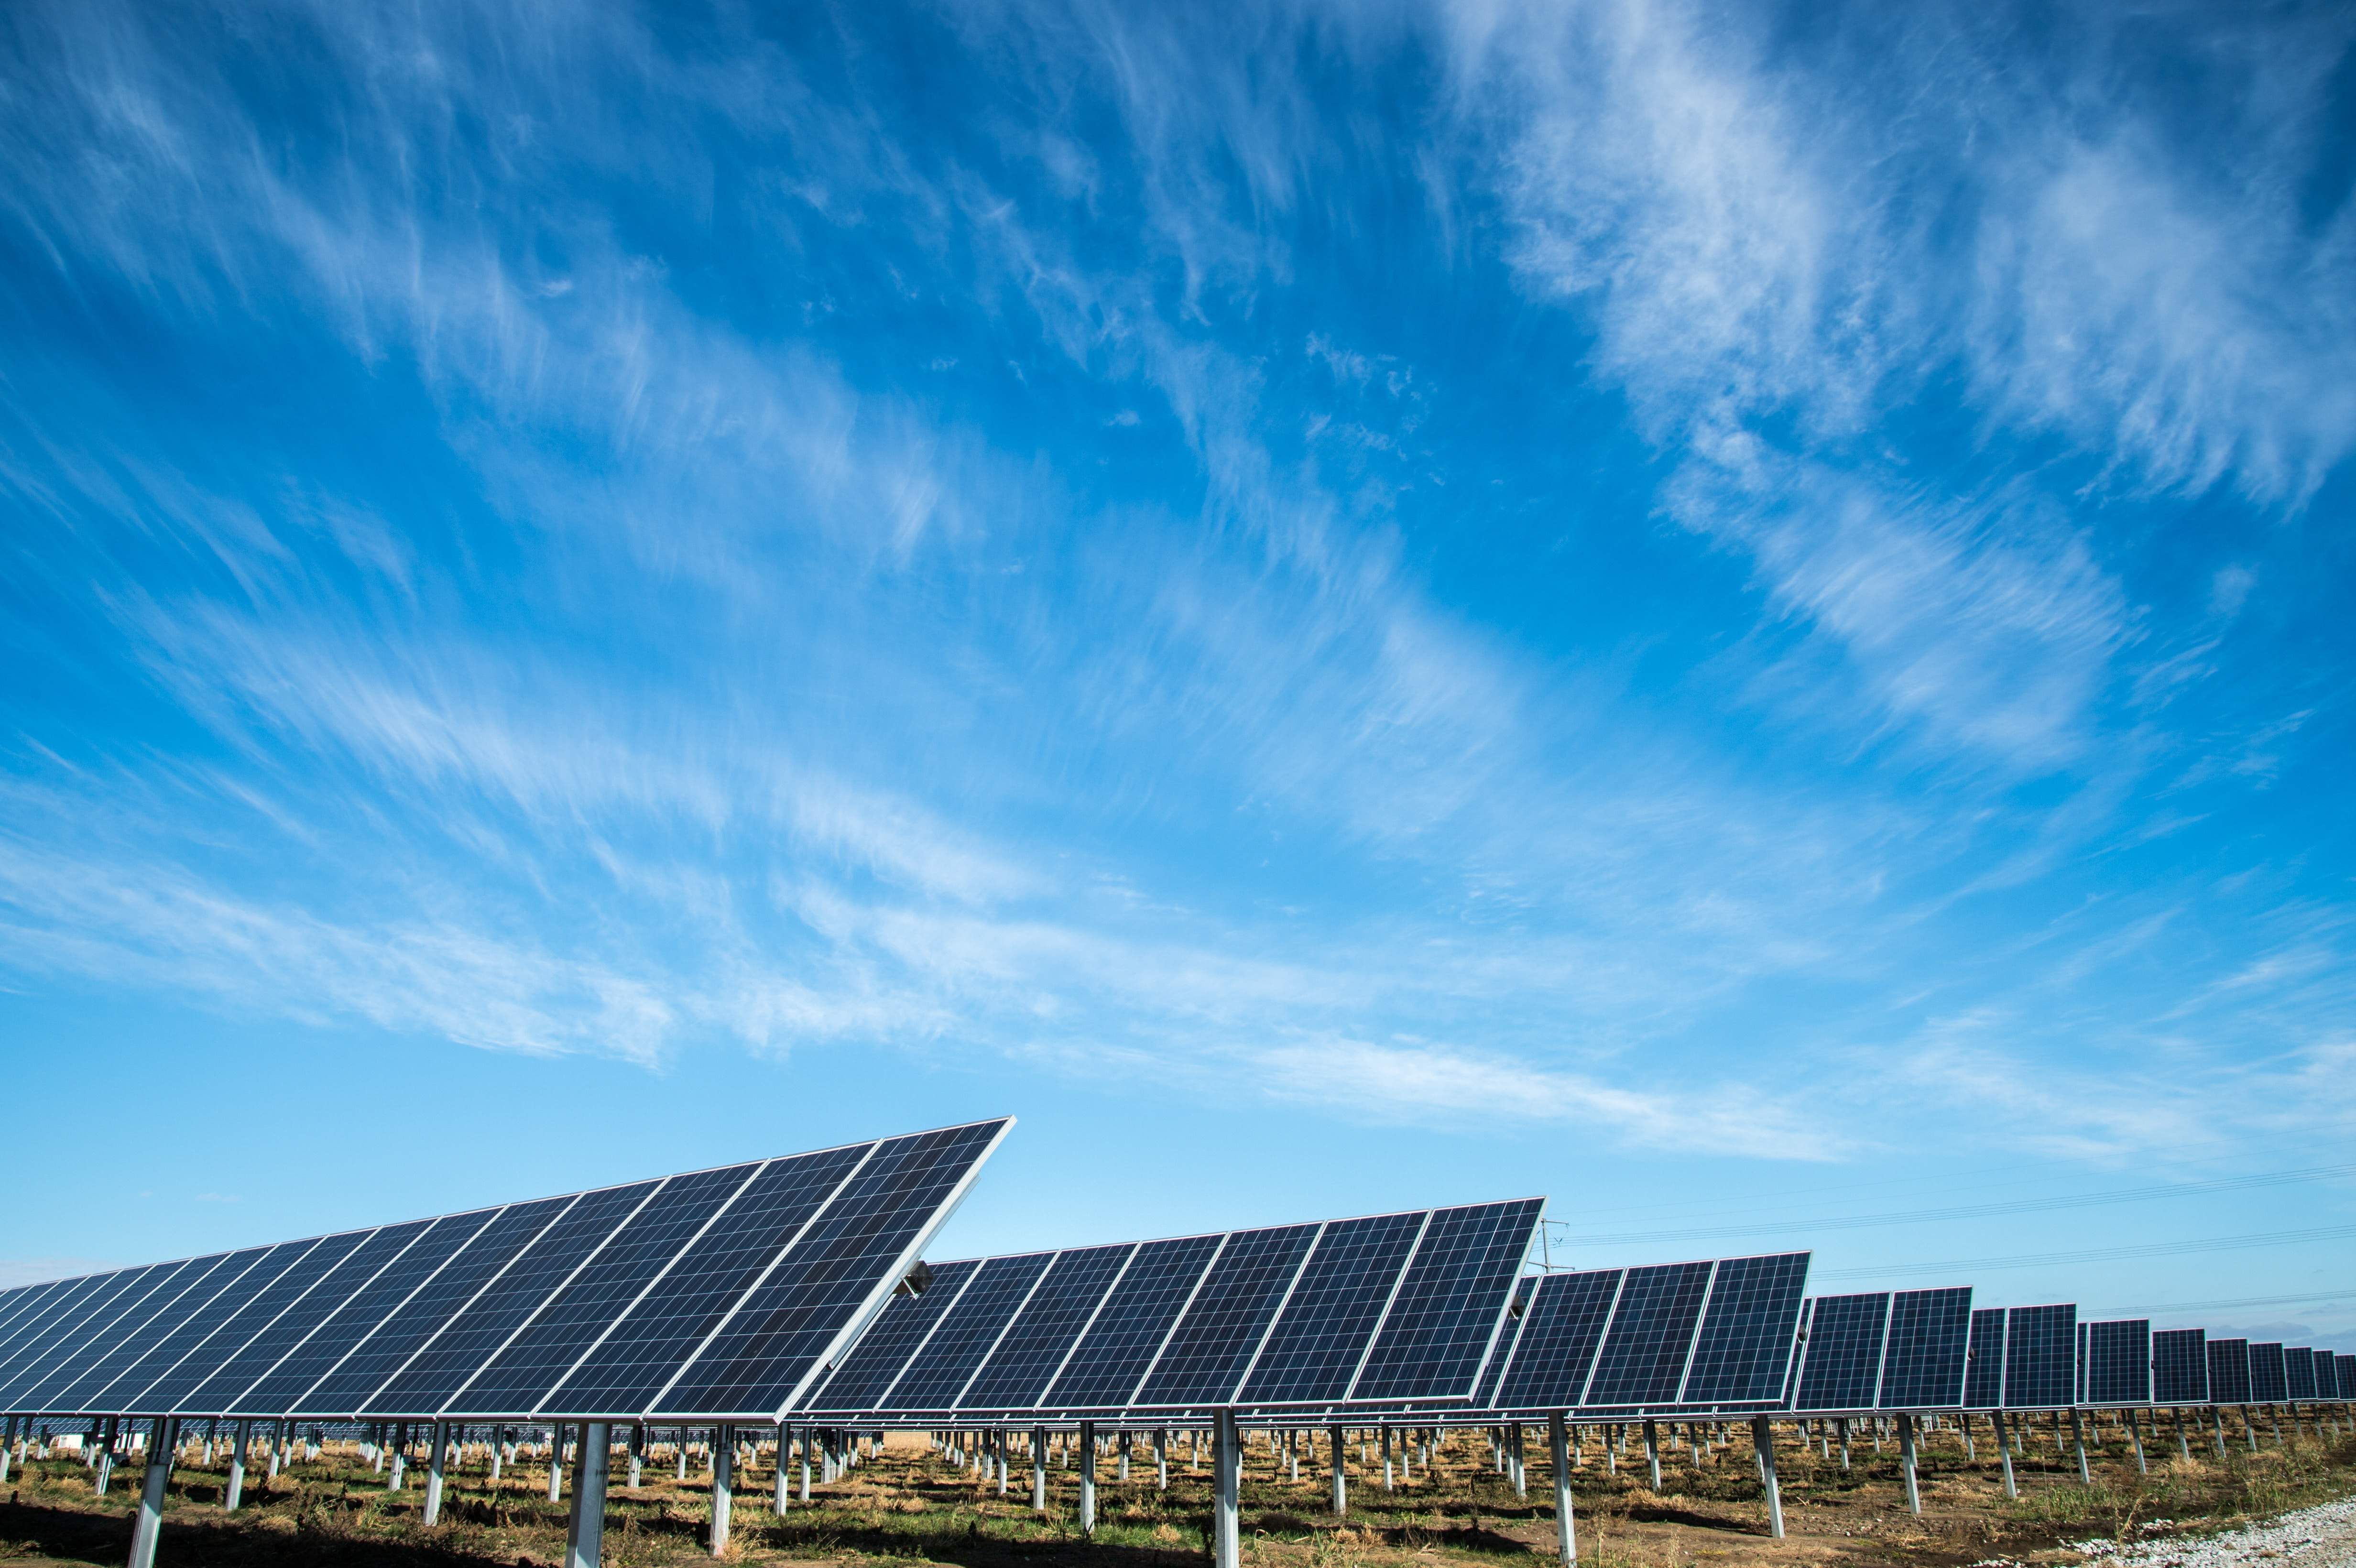 Scatec Solar agrees to build two solar farms in Ukraine